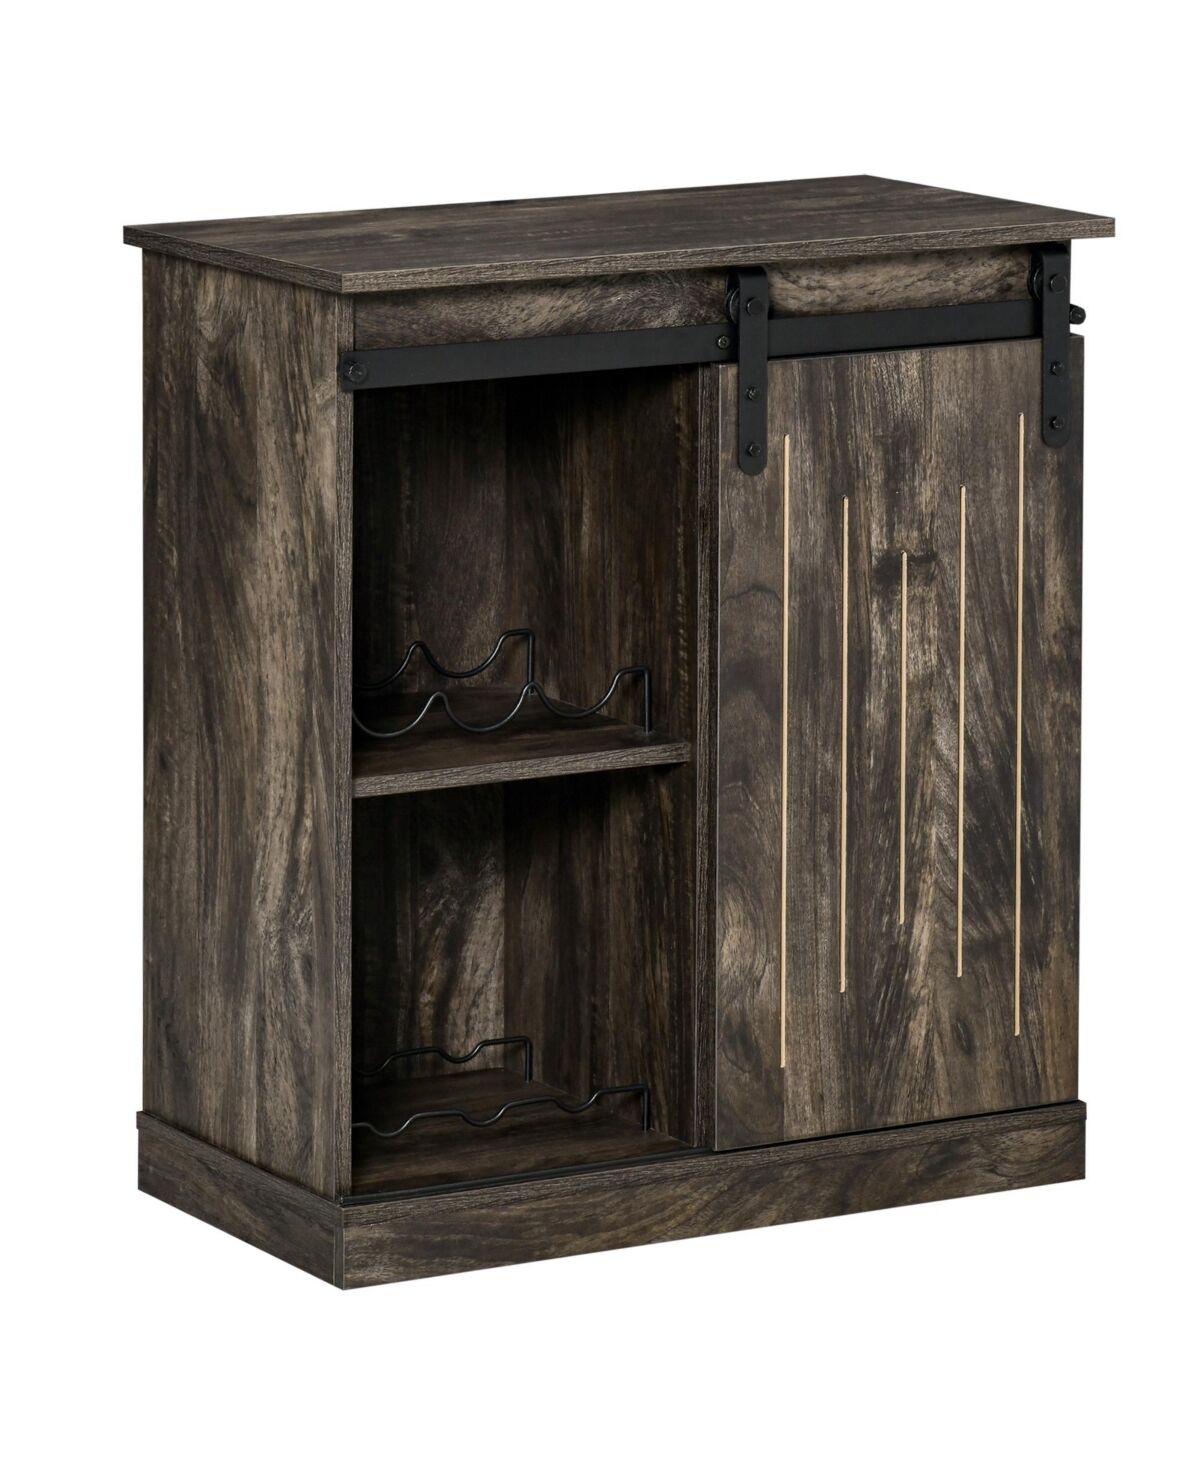 Homcom Rustic Sideboard Storage Cabinet w/ 6 Bottle Wine Rack & 2 Shelves, Grey - Grey